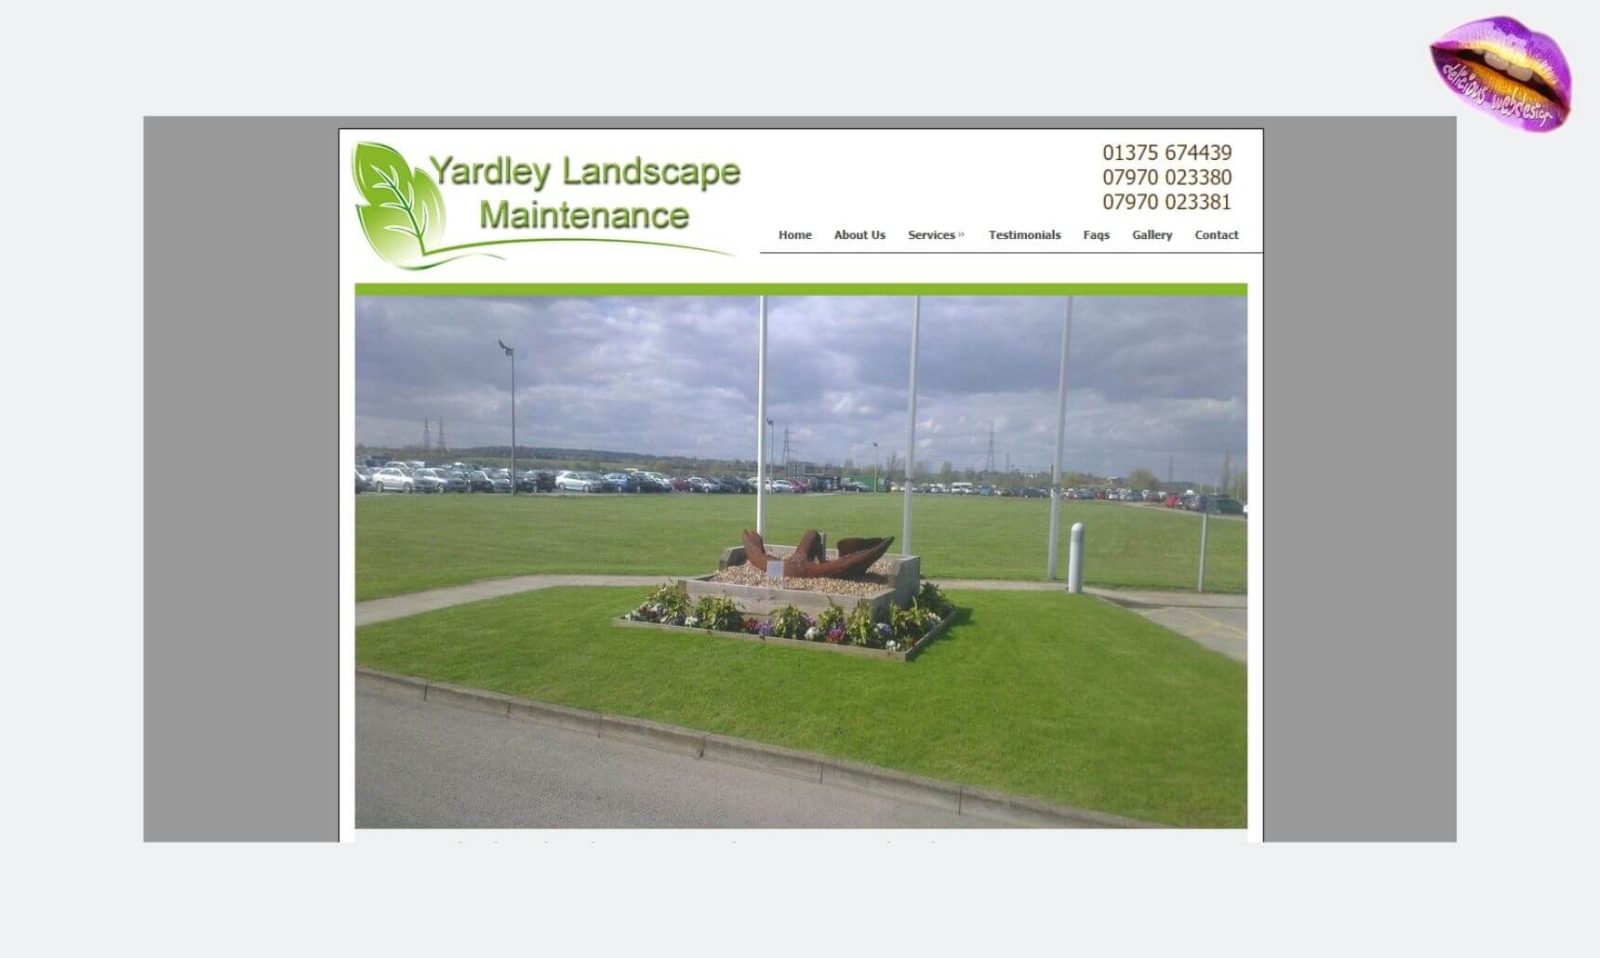 Yardley Landscapes